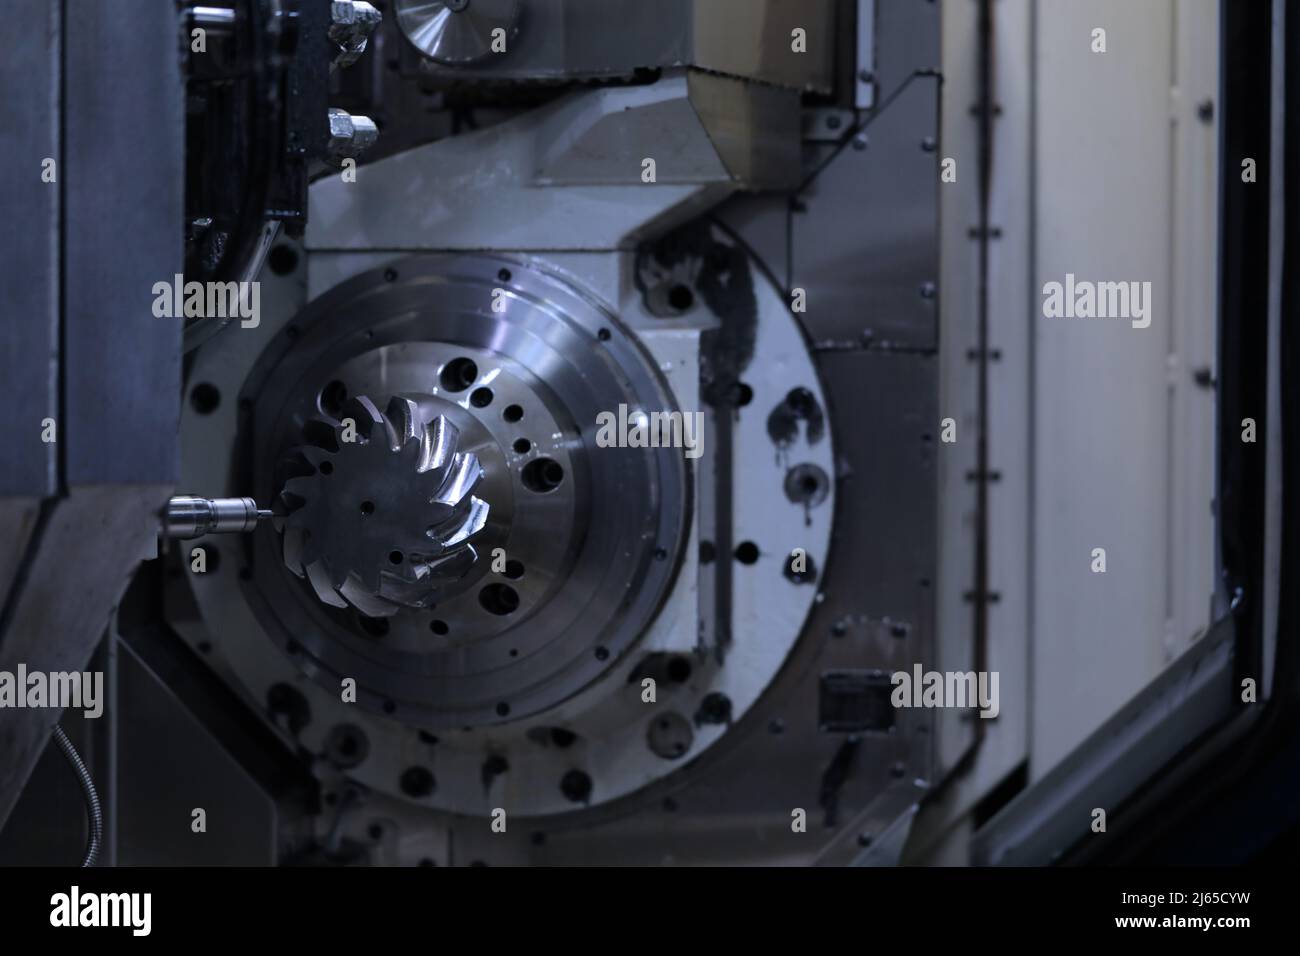 Metalworking cnc milling machine, cutting metal modern processing technology Stock Photo